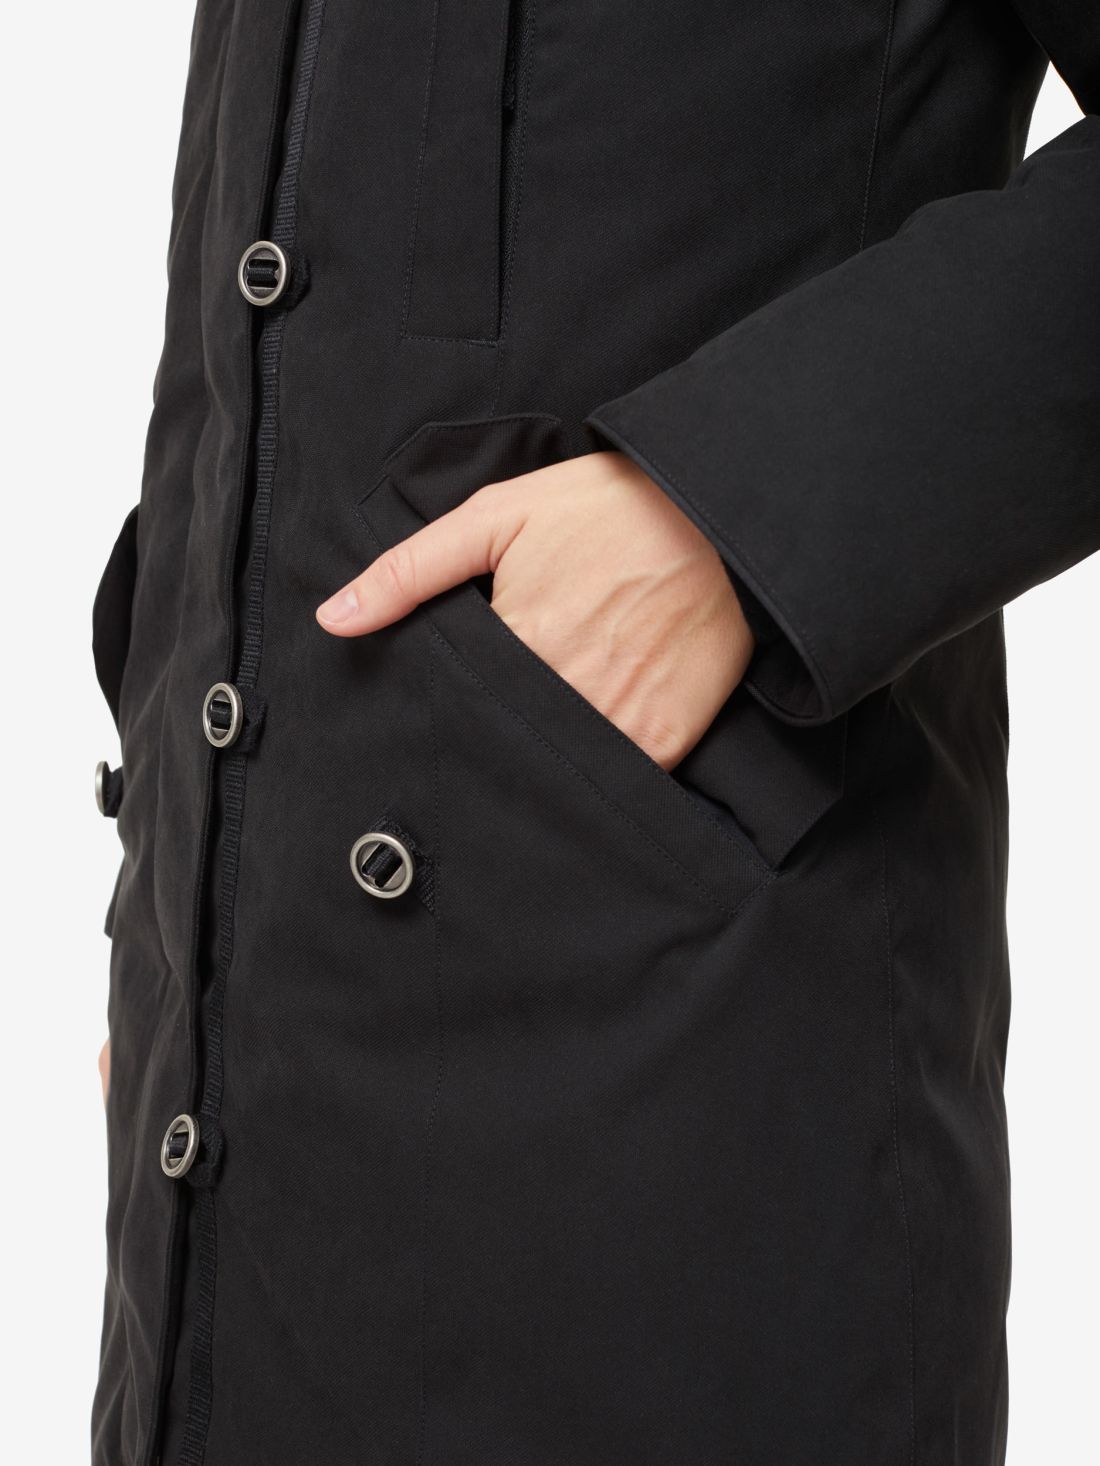 Bask Женское пуховое пальто Bask Hatanga V2